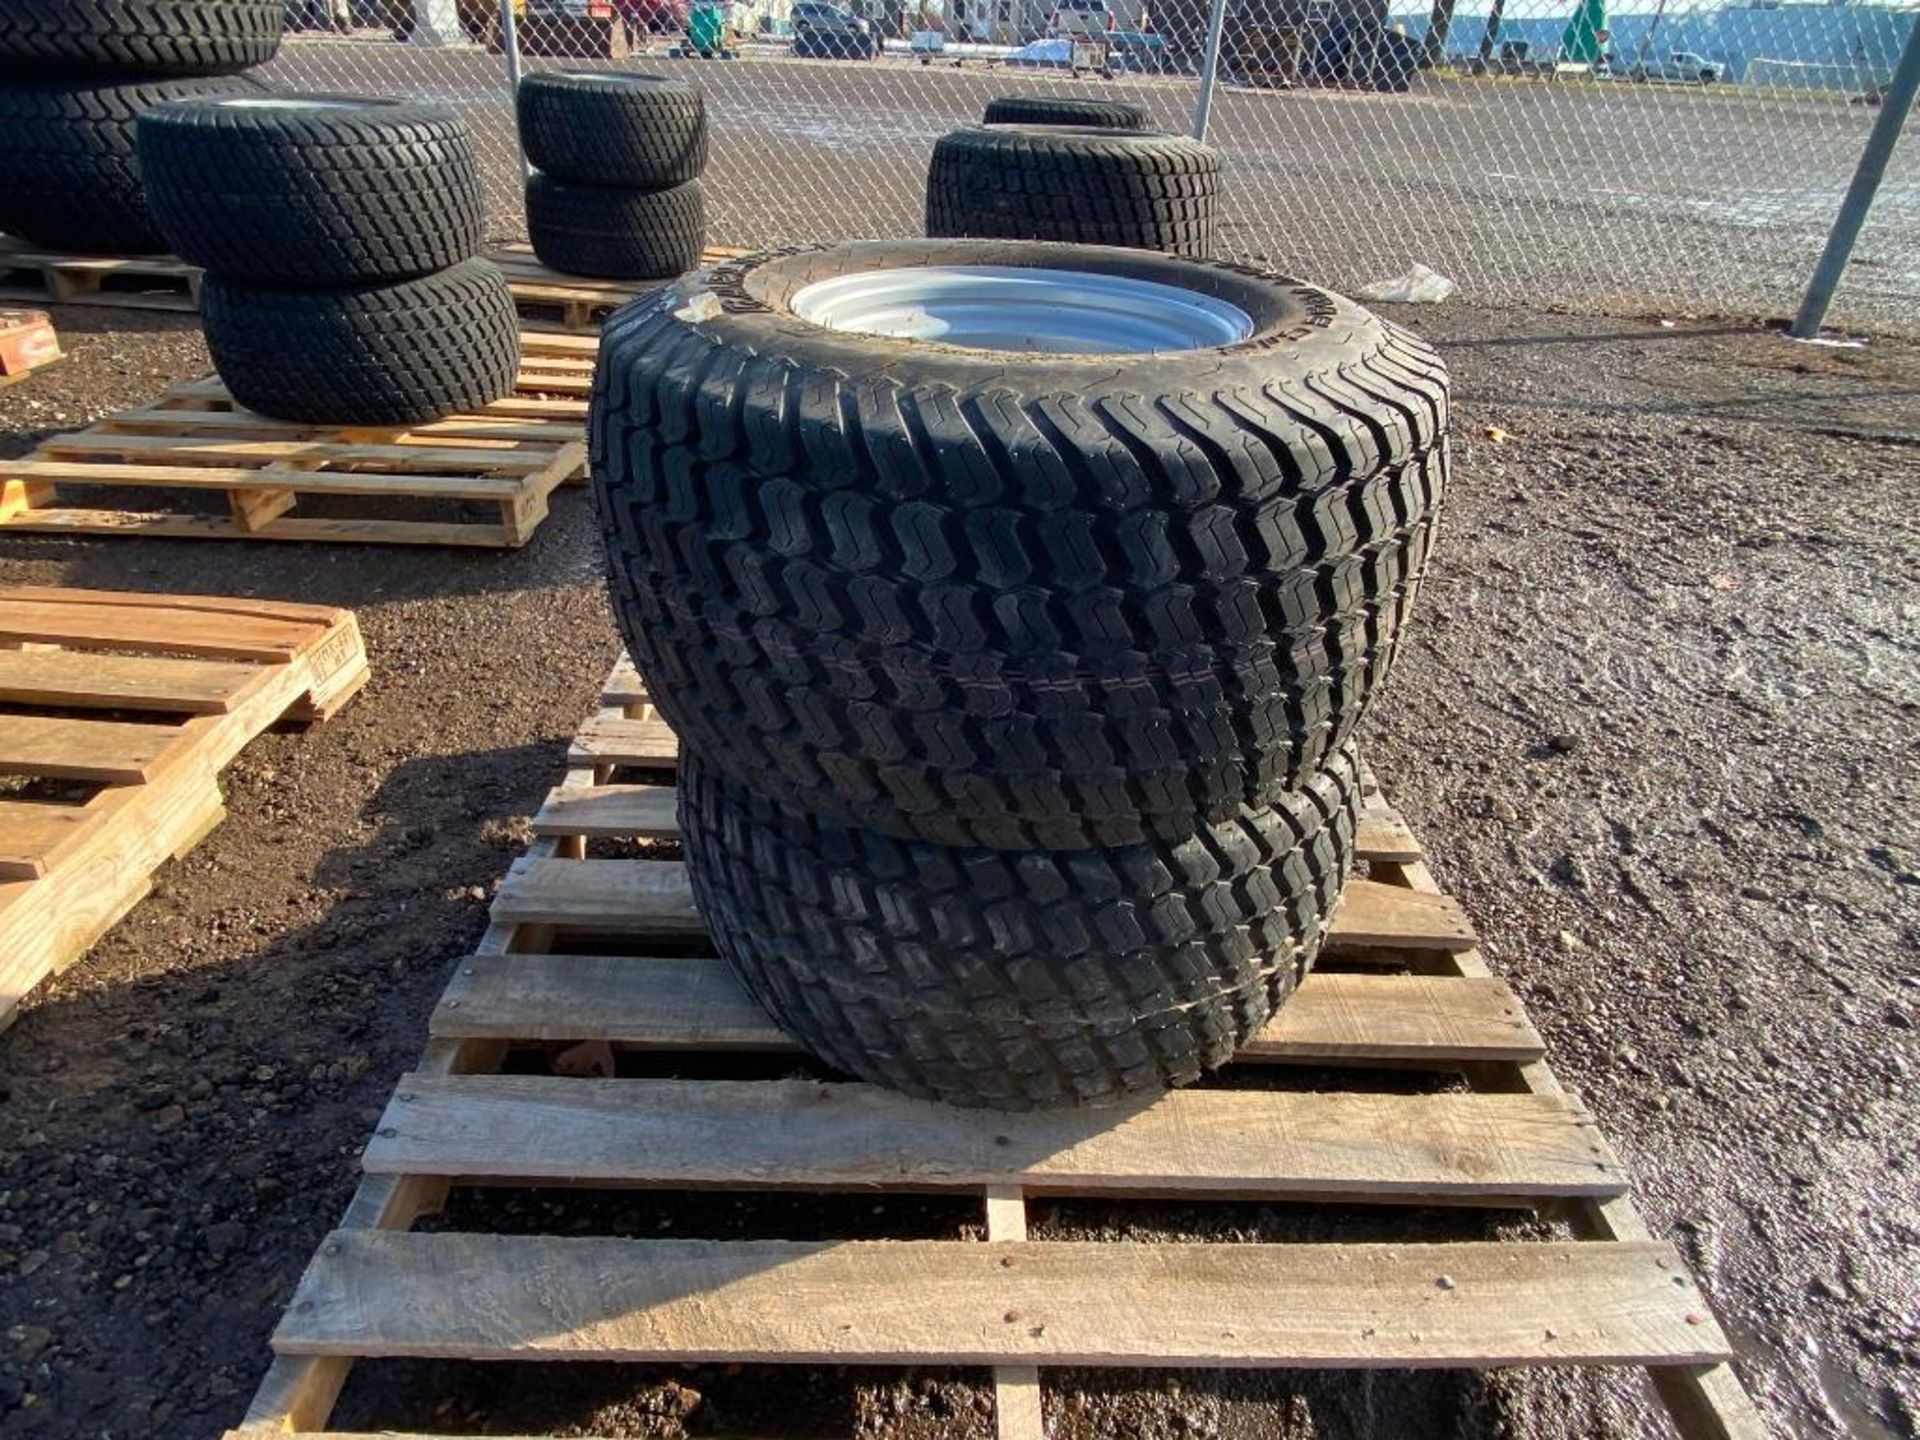 New Set of 2 Carlisle Multi Trac C/S Tires - Image 2 of 3